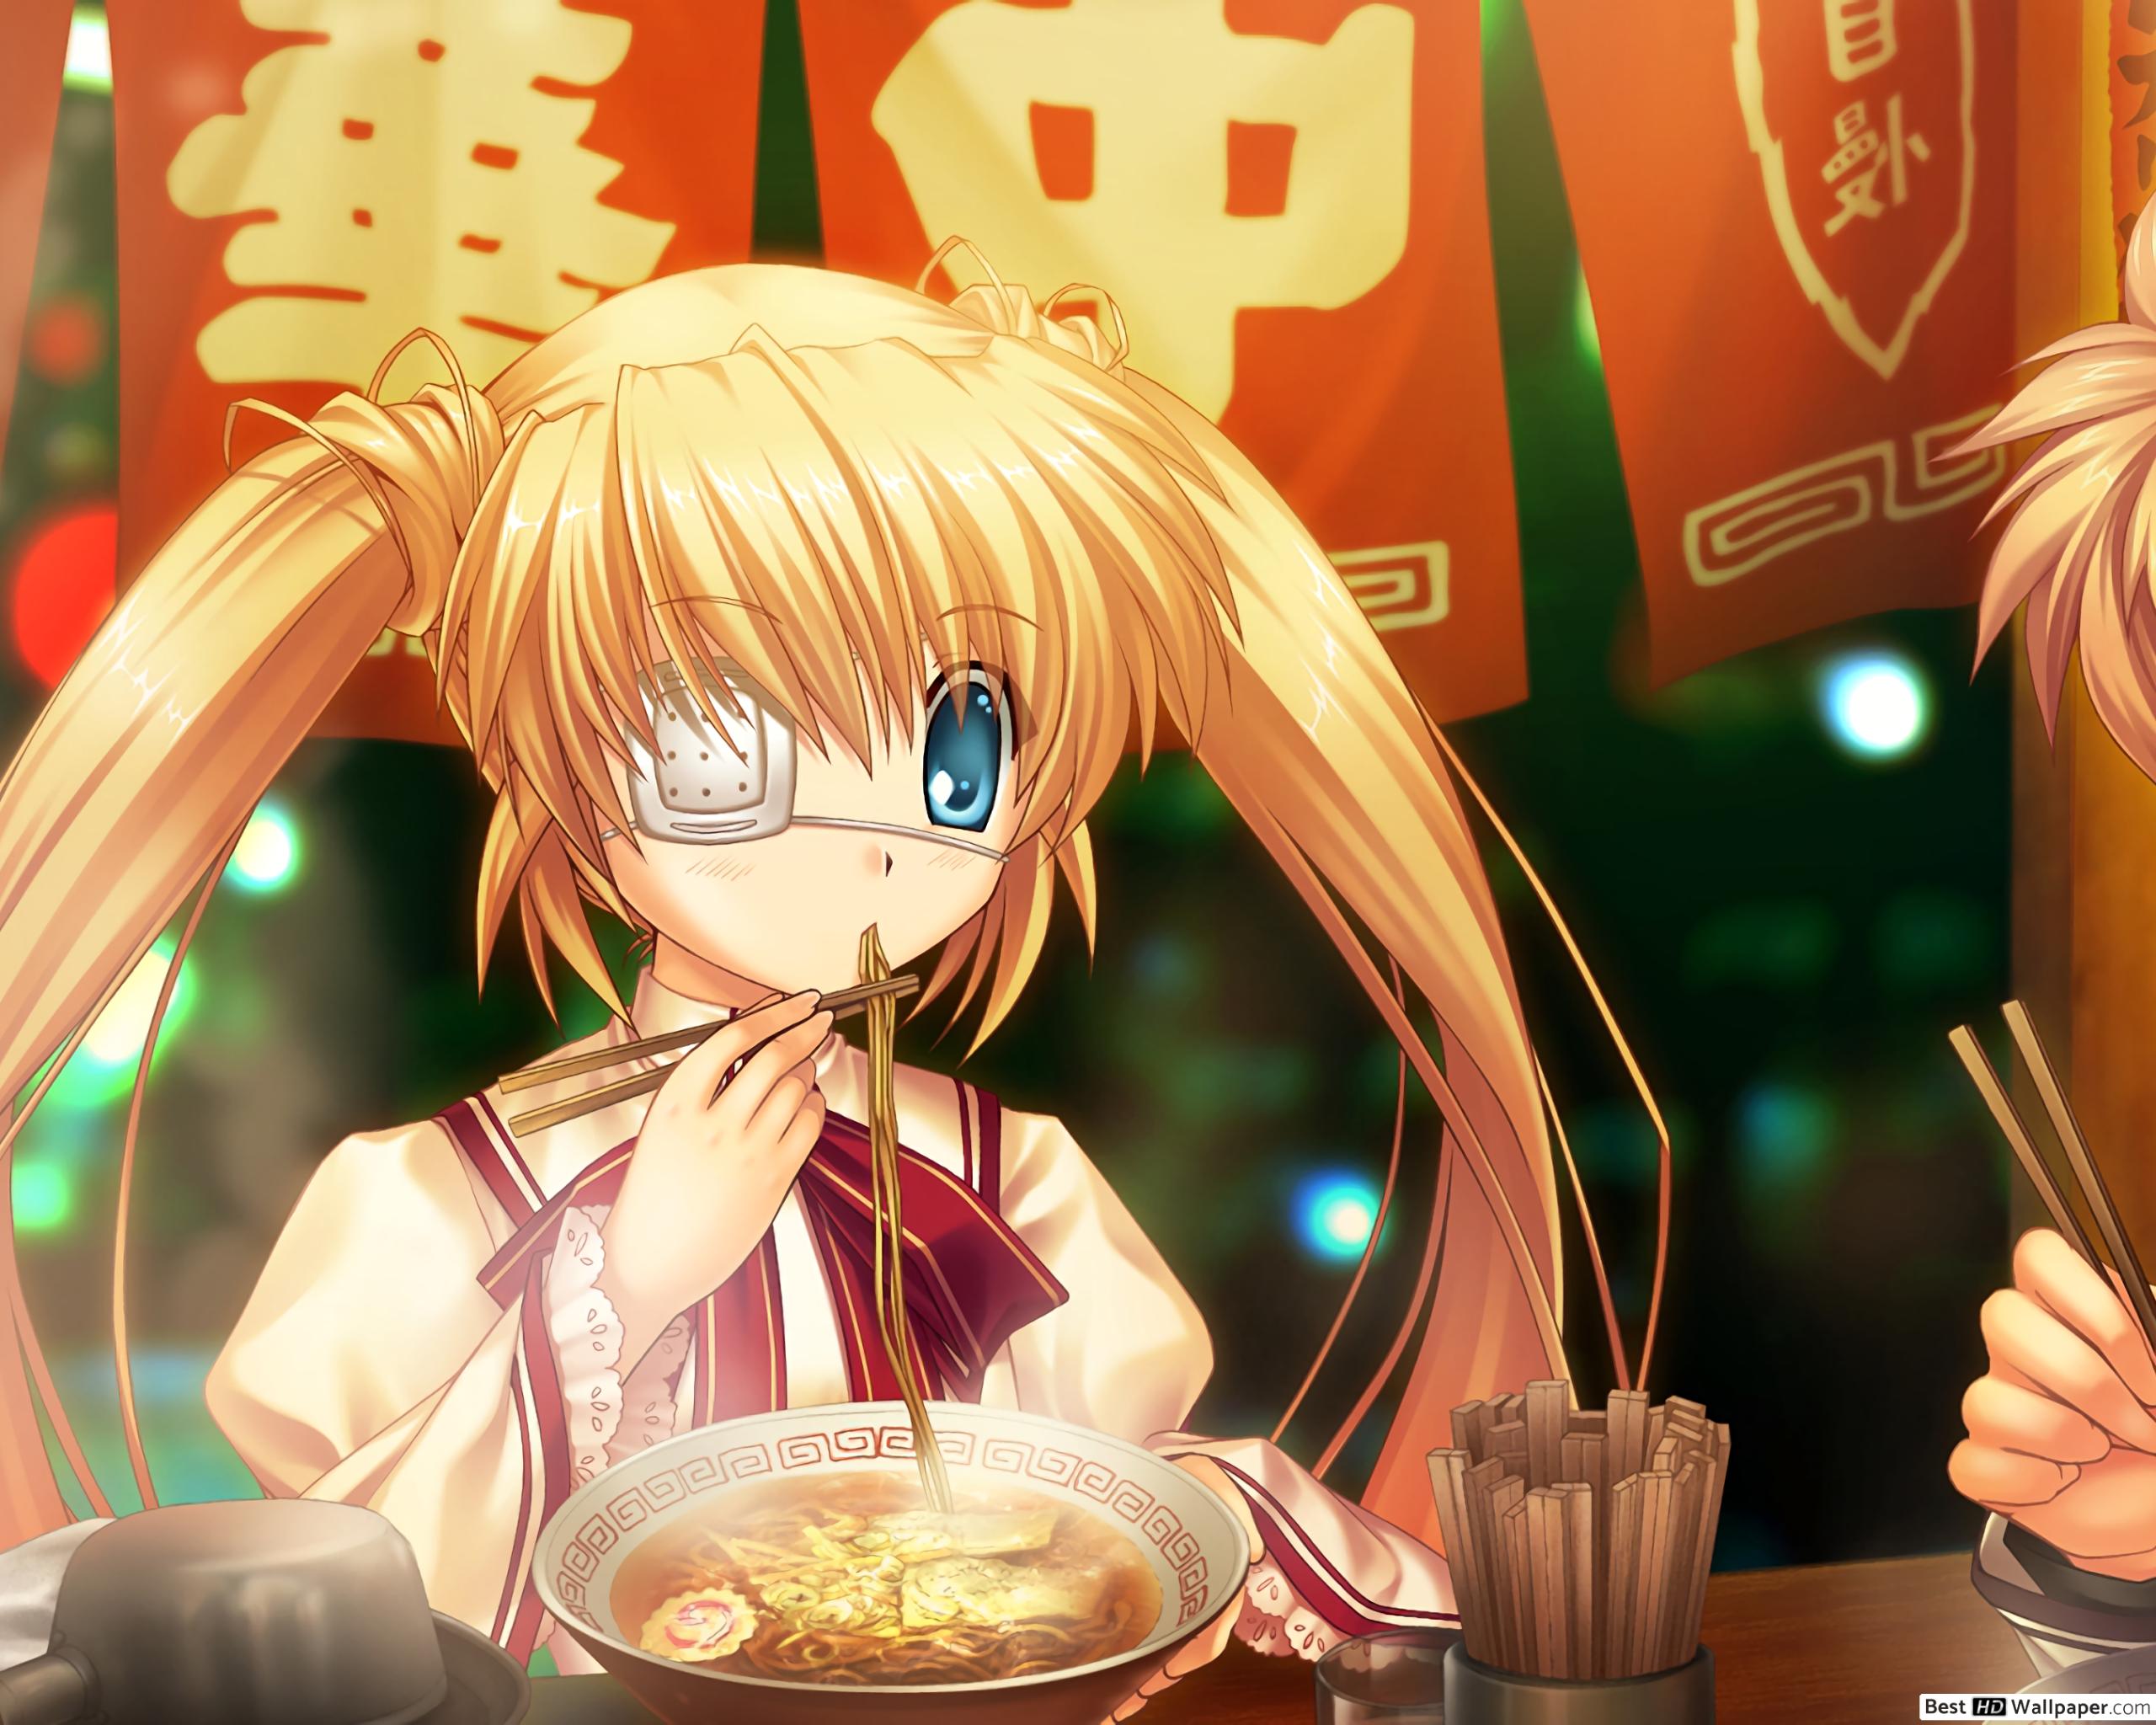 KREA  naruto eating ramen anime art digital art 4 k